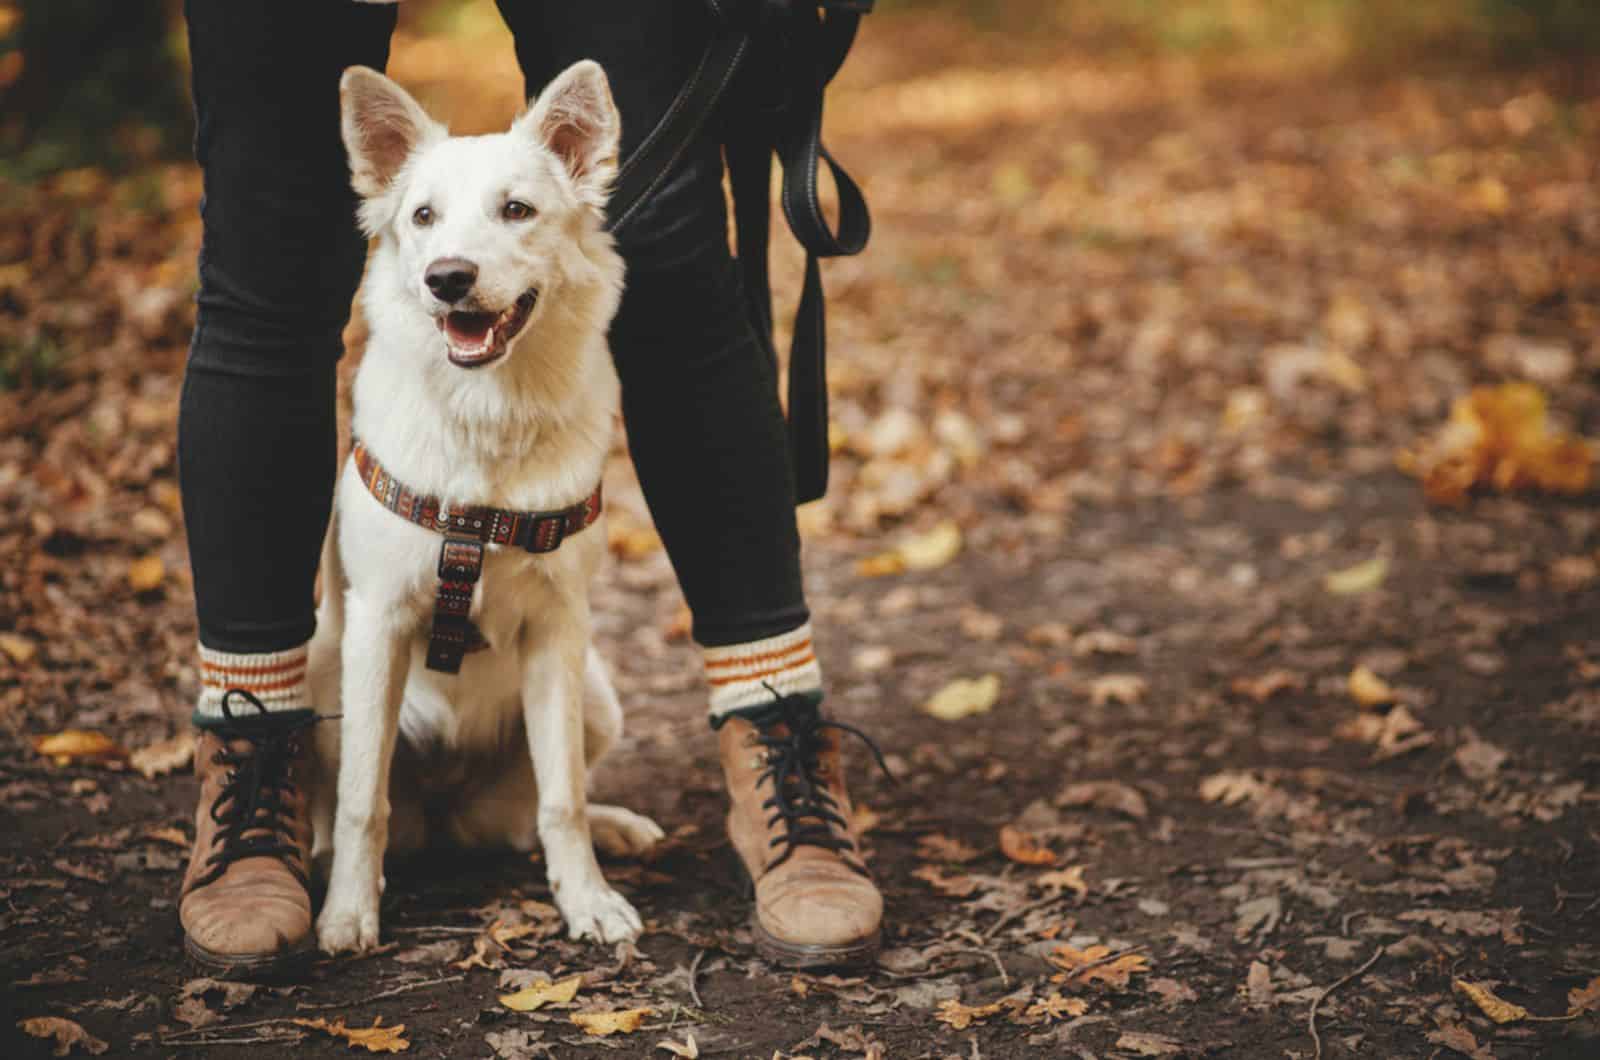 dog standing between owner's legs in the park